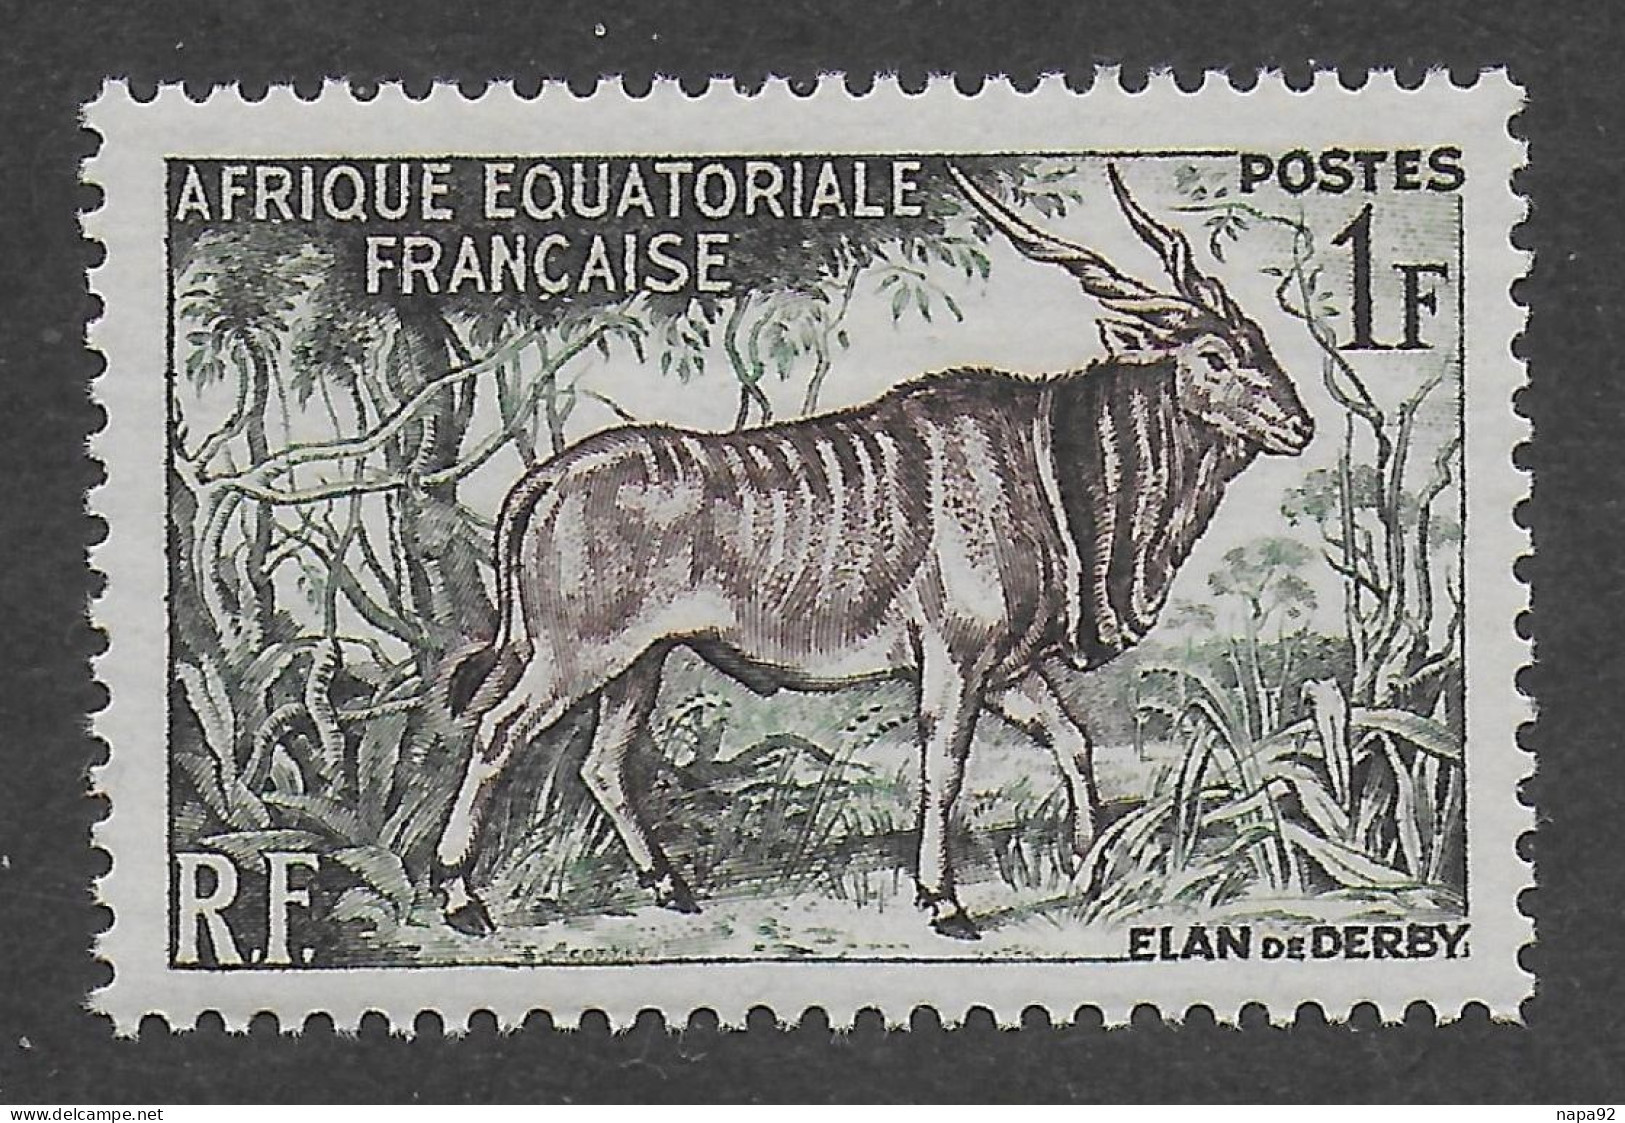 AFRIQUE EQUATORIALE FRANCAISE - AEF - A.E.F. - 1957 - YT 238** - MNH - Nuevos